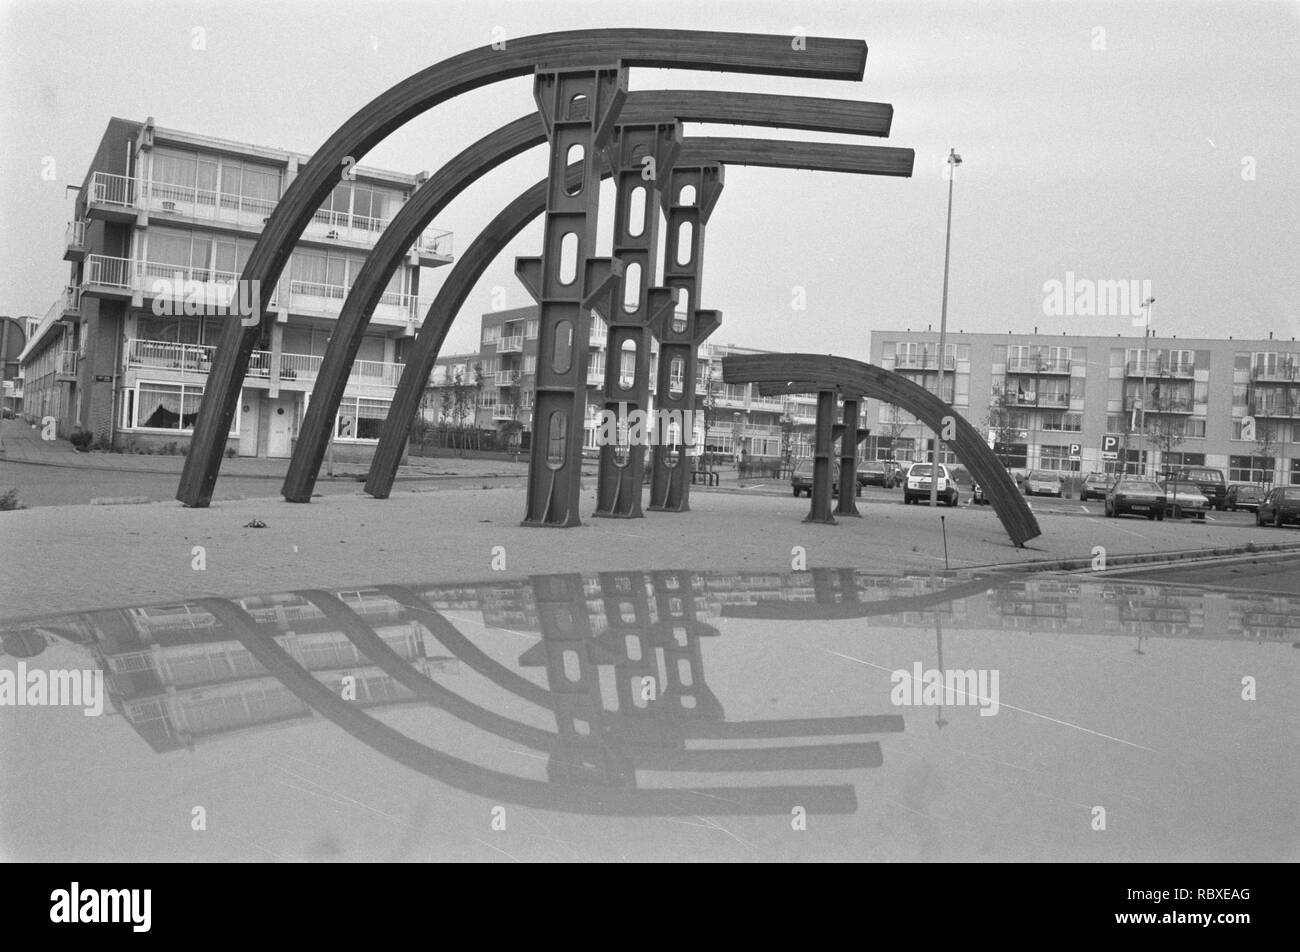 ADM-monument in Amsterdam Noord i.v.m. onthulling a.s. vrijdag, Bestanddeelnr 934-3414. Stock Photo